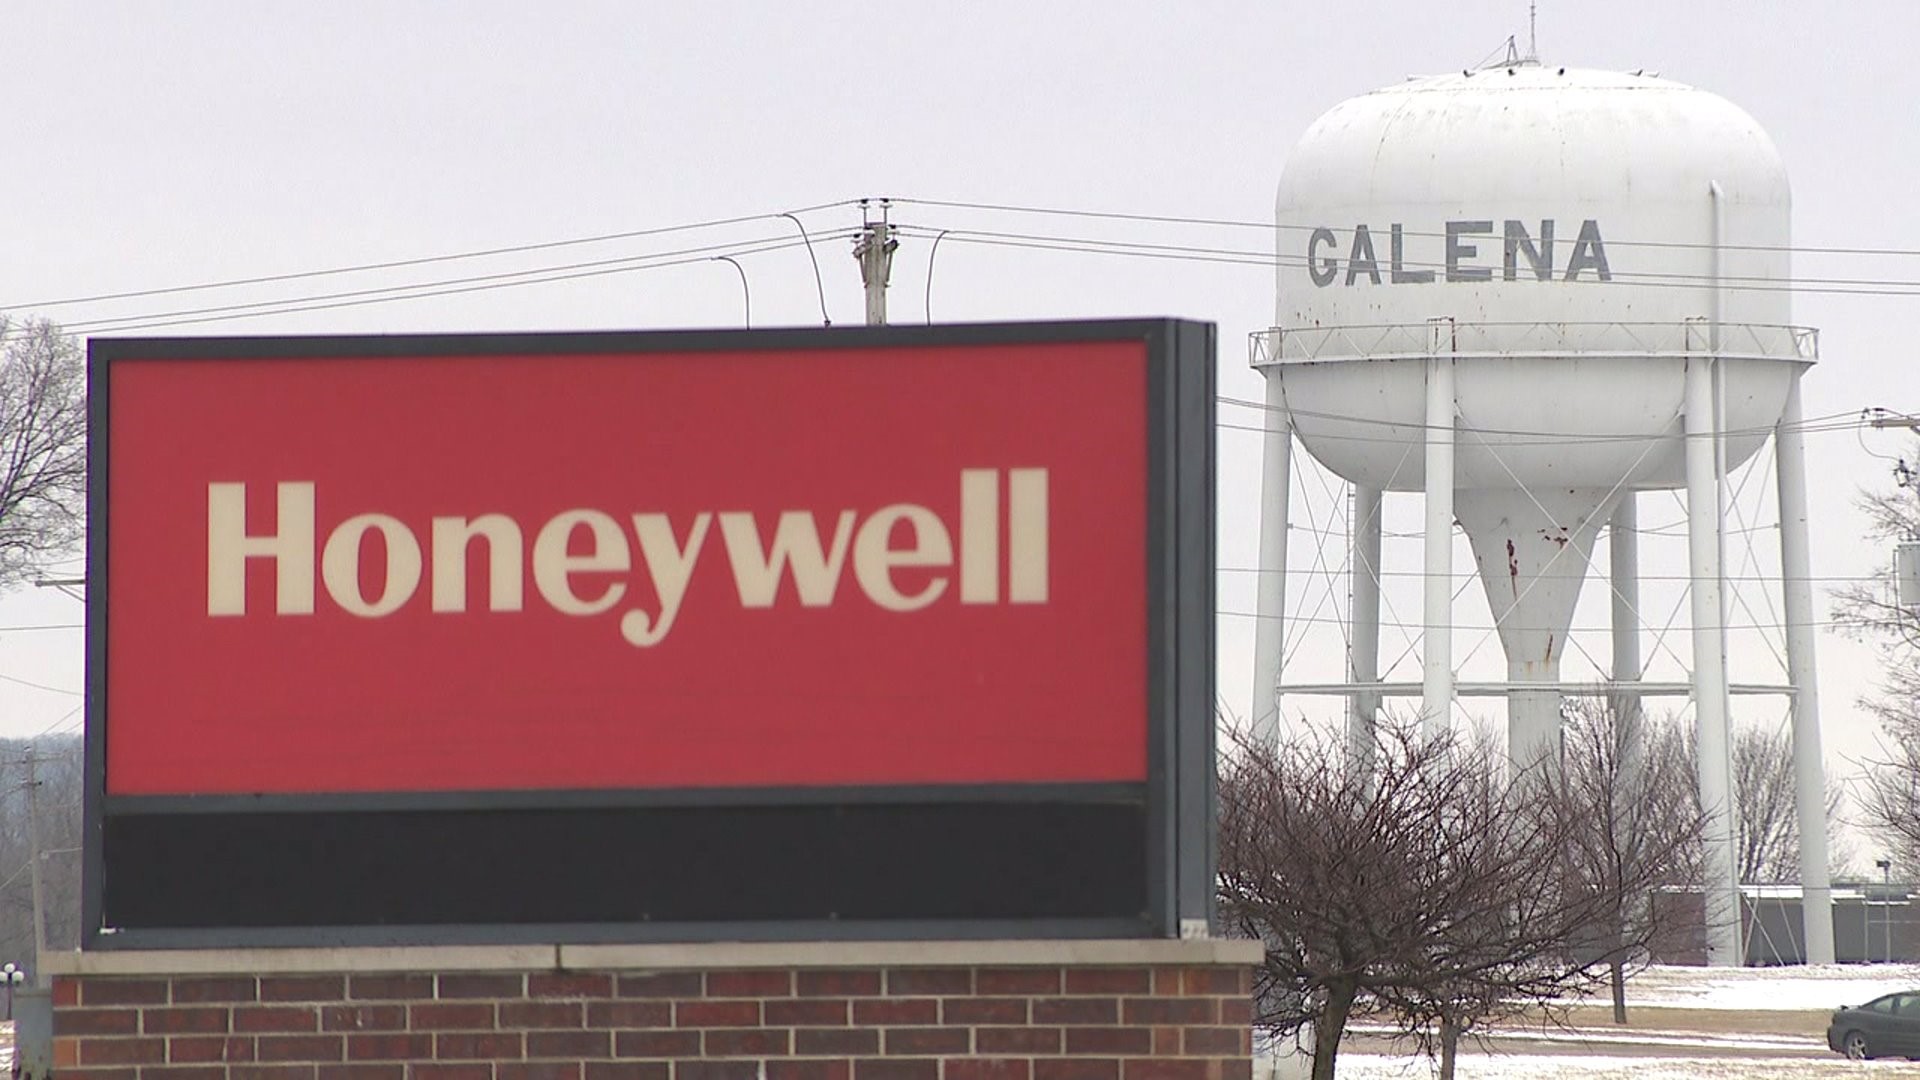 Honeywell announces closure of Galena plant